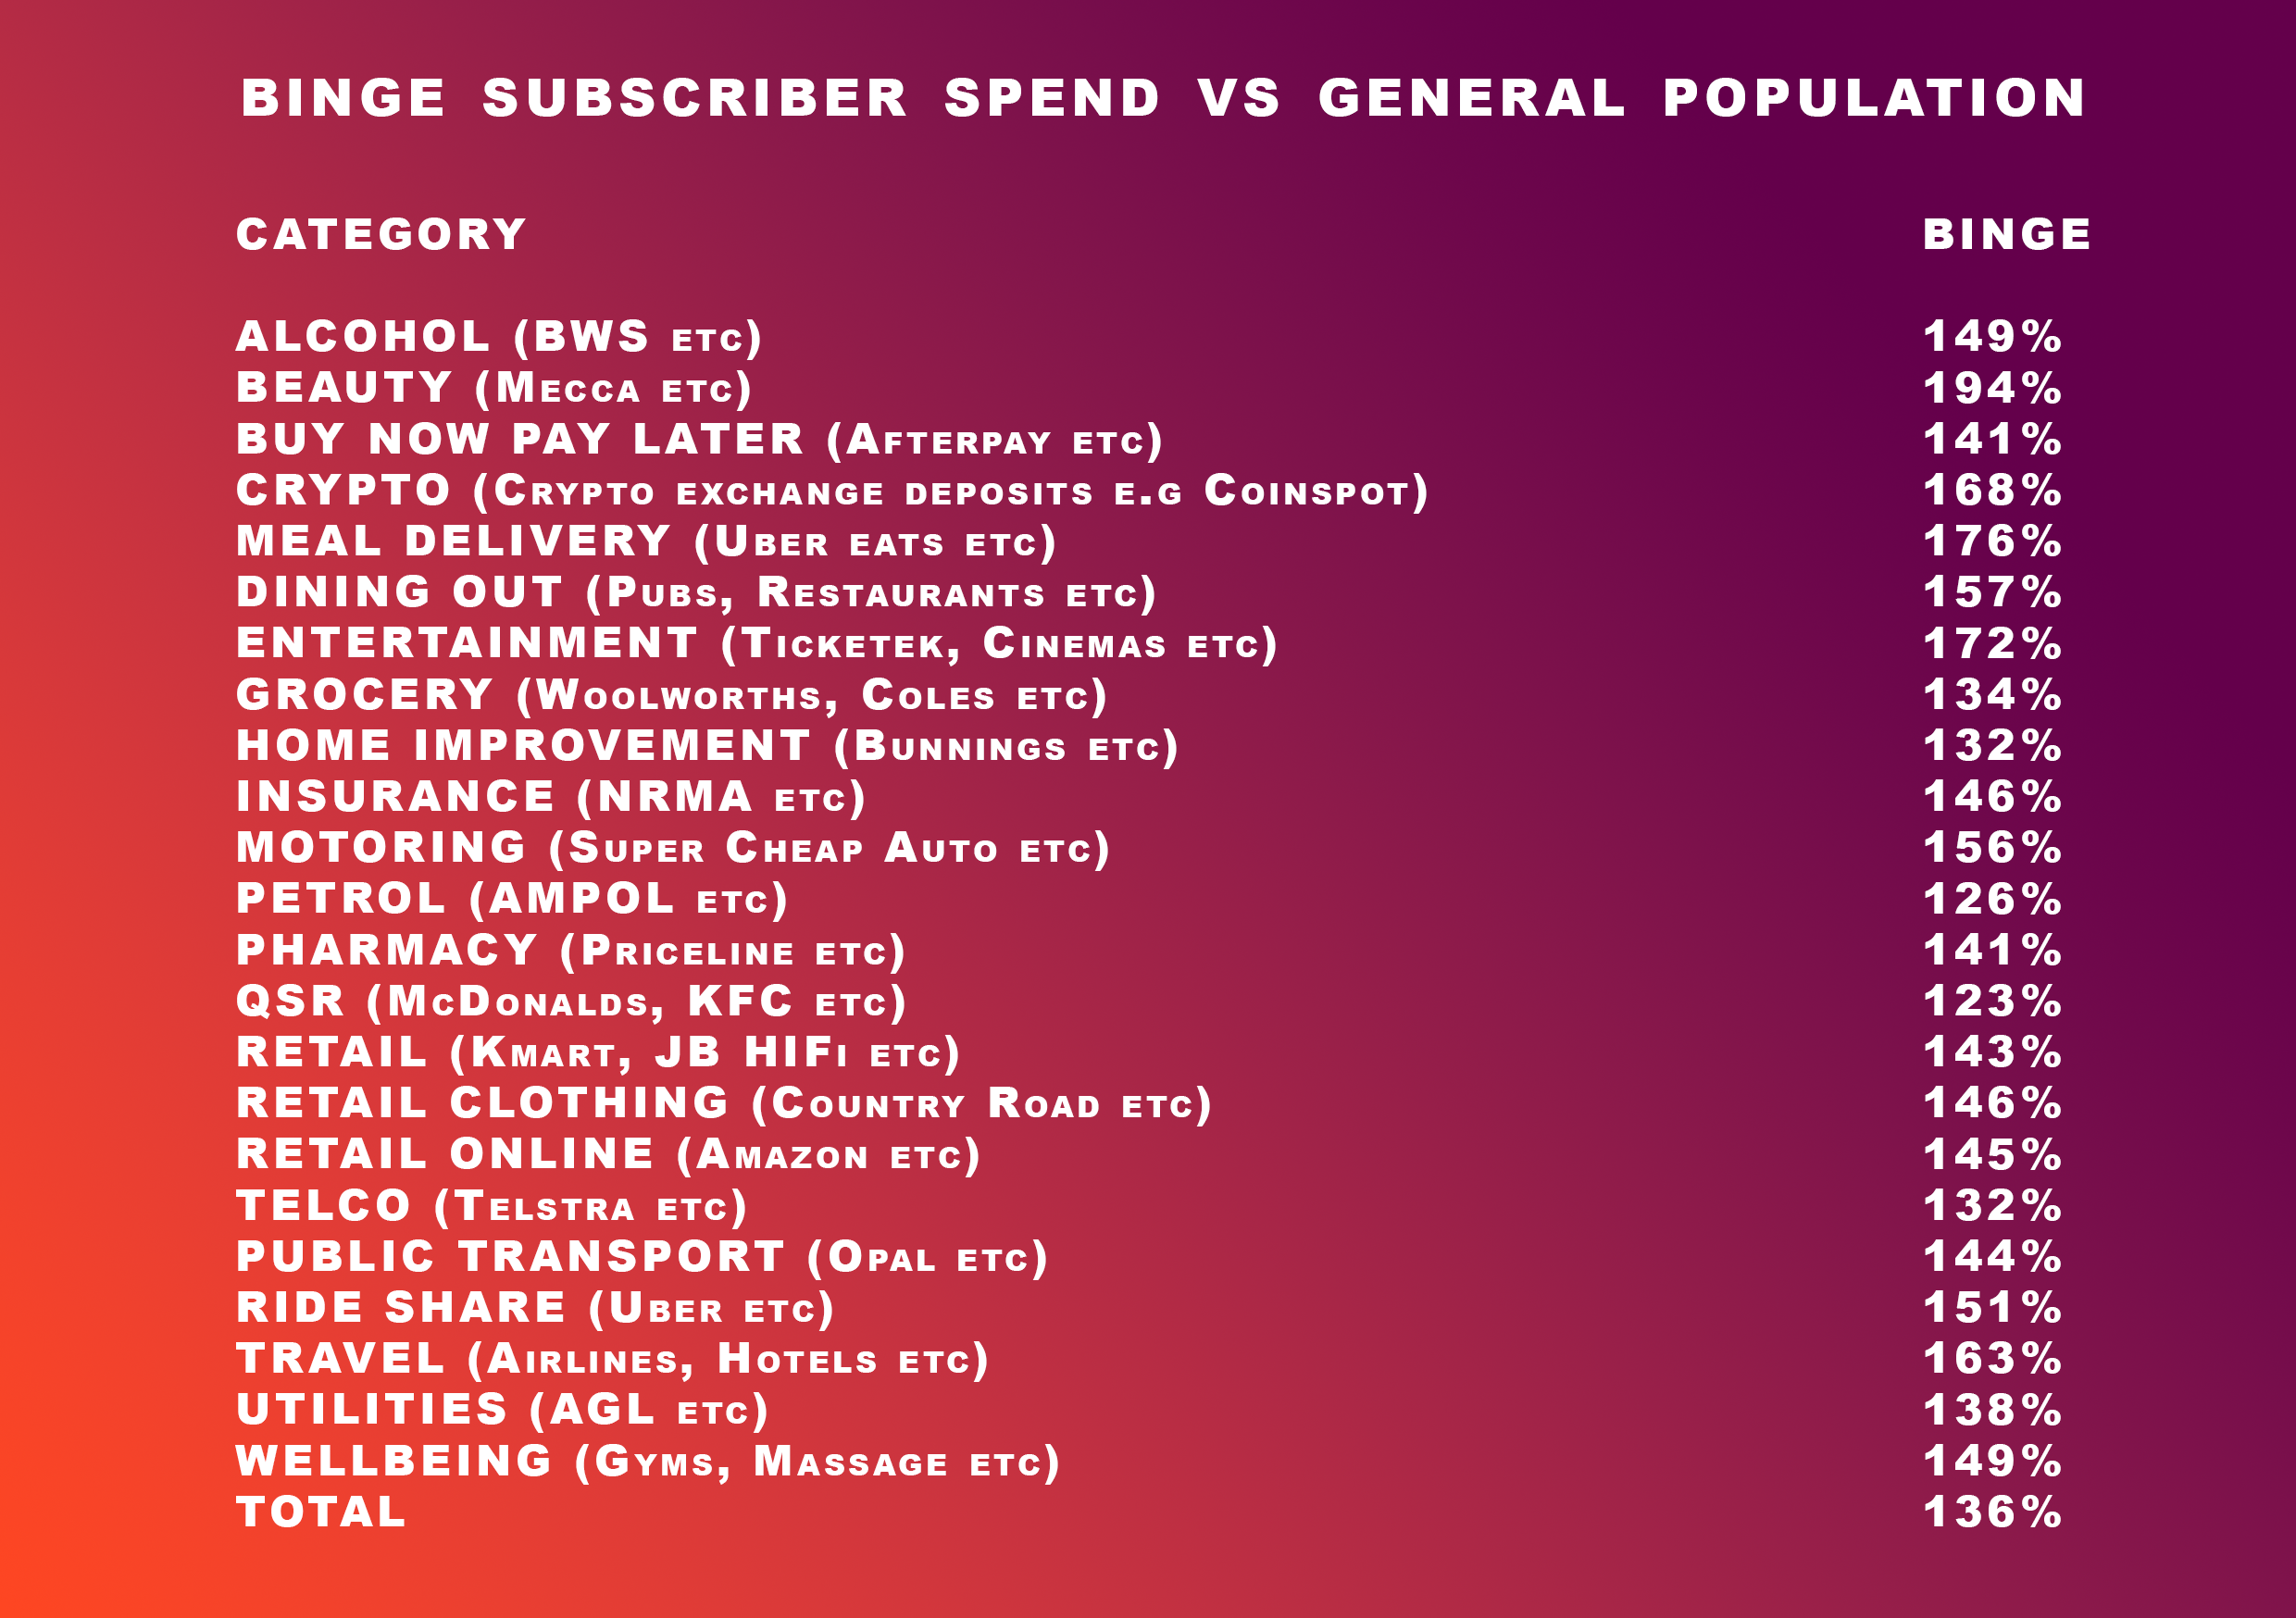 Binge ad spend vs general population